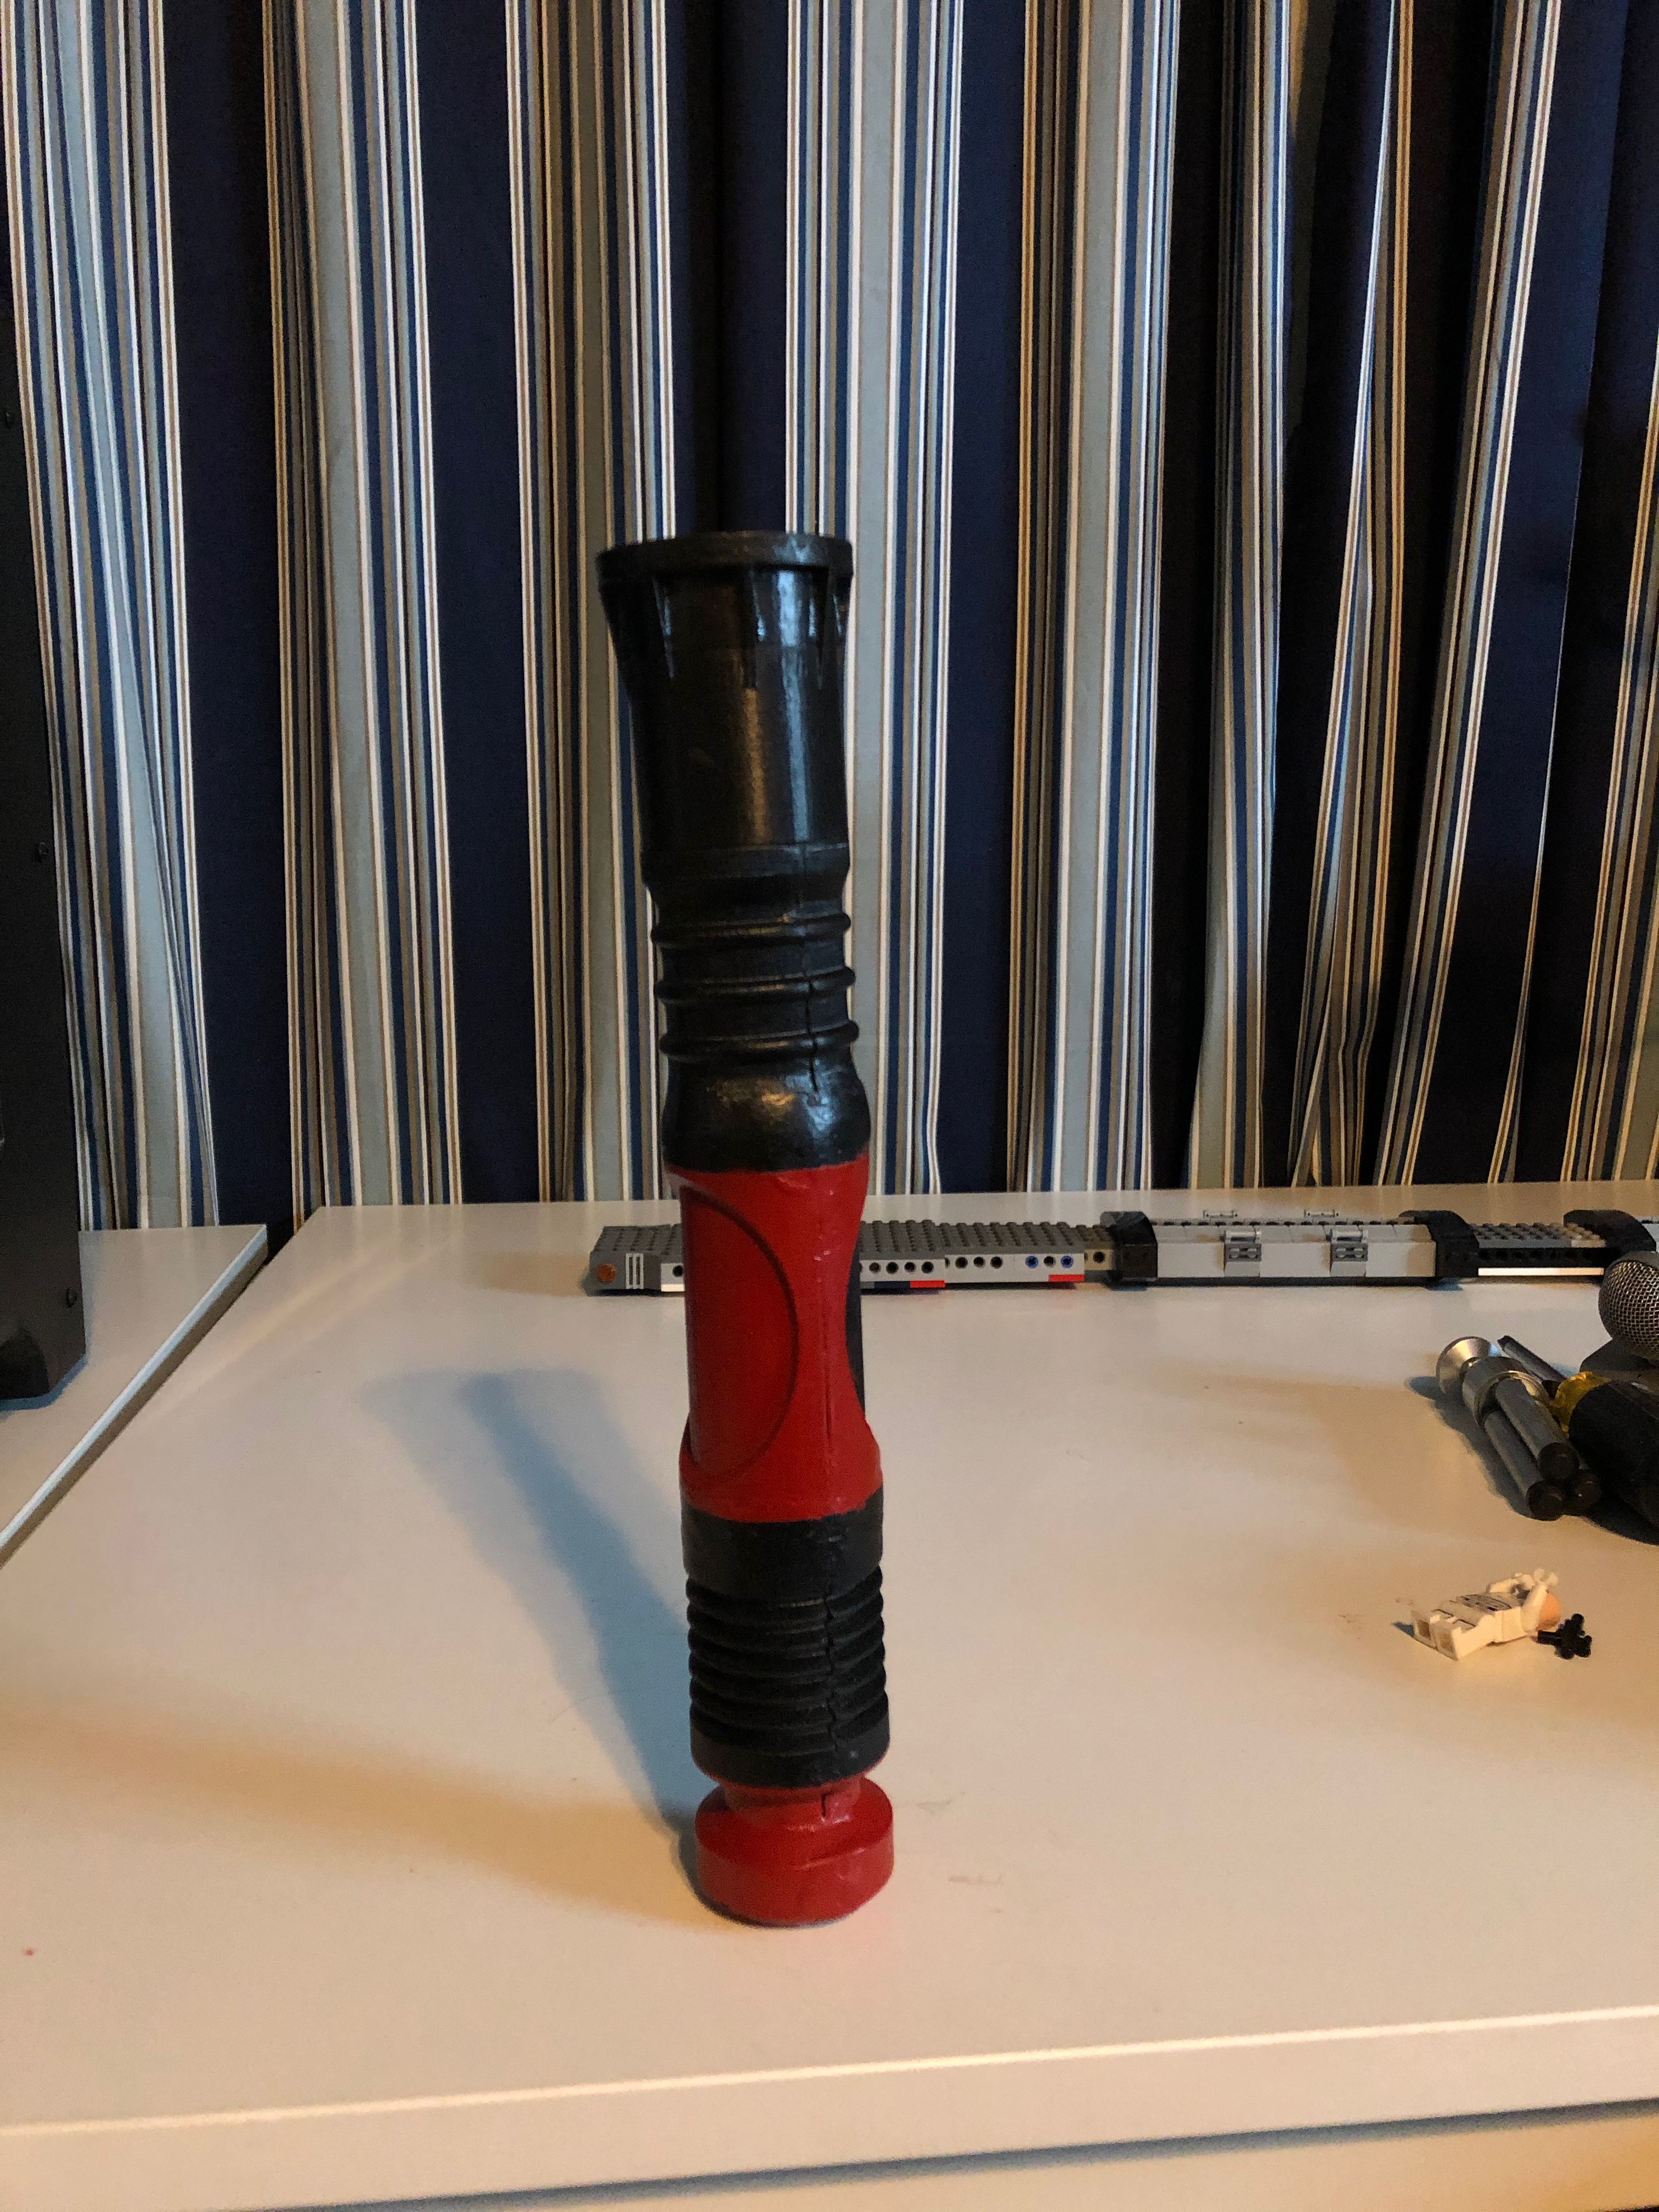 A lightsaber hilt created by the 3D printer